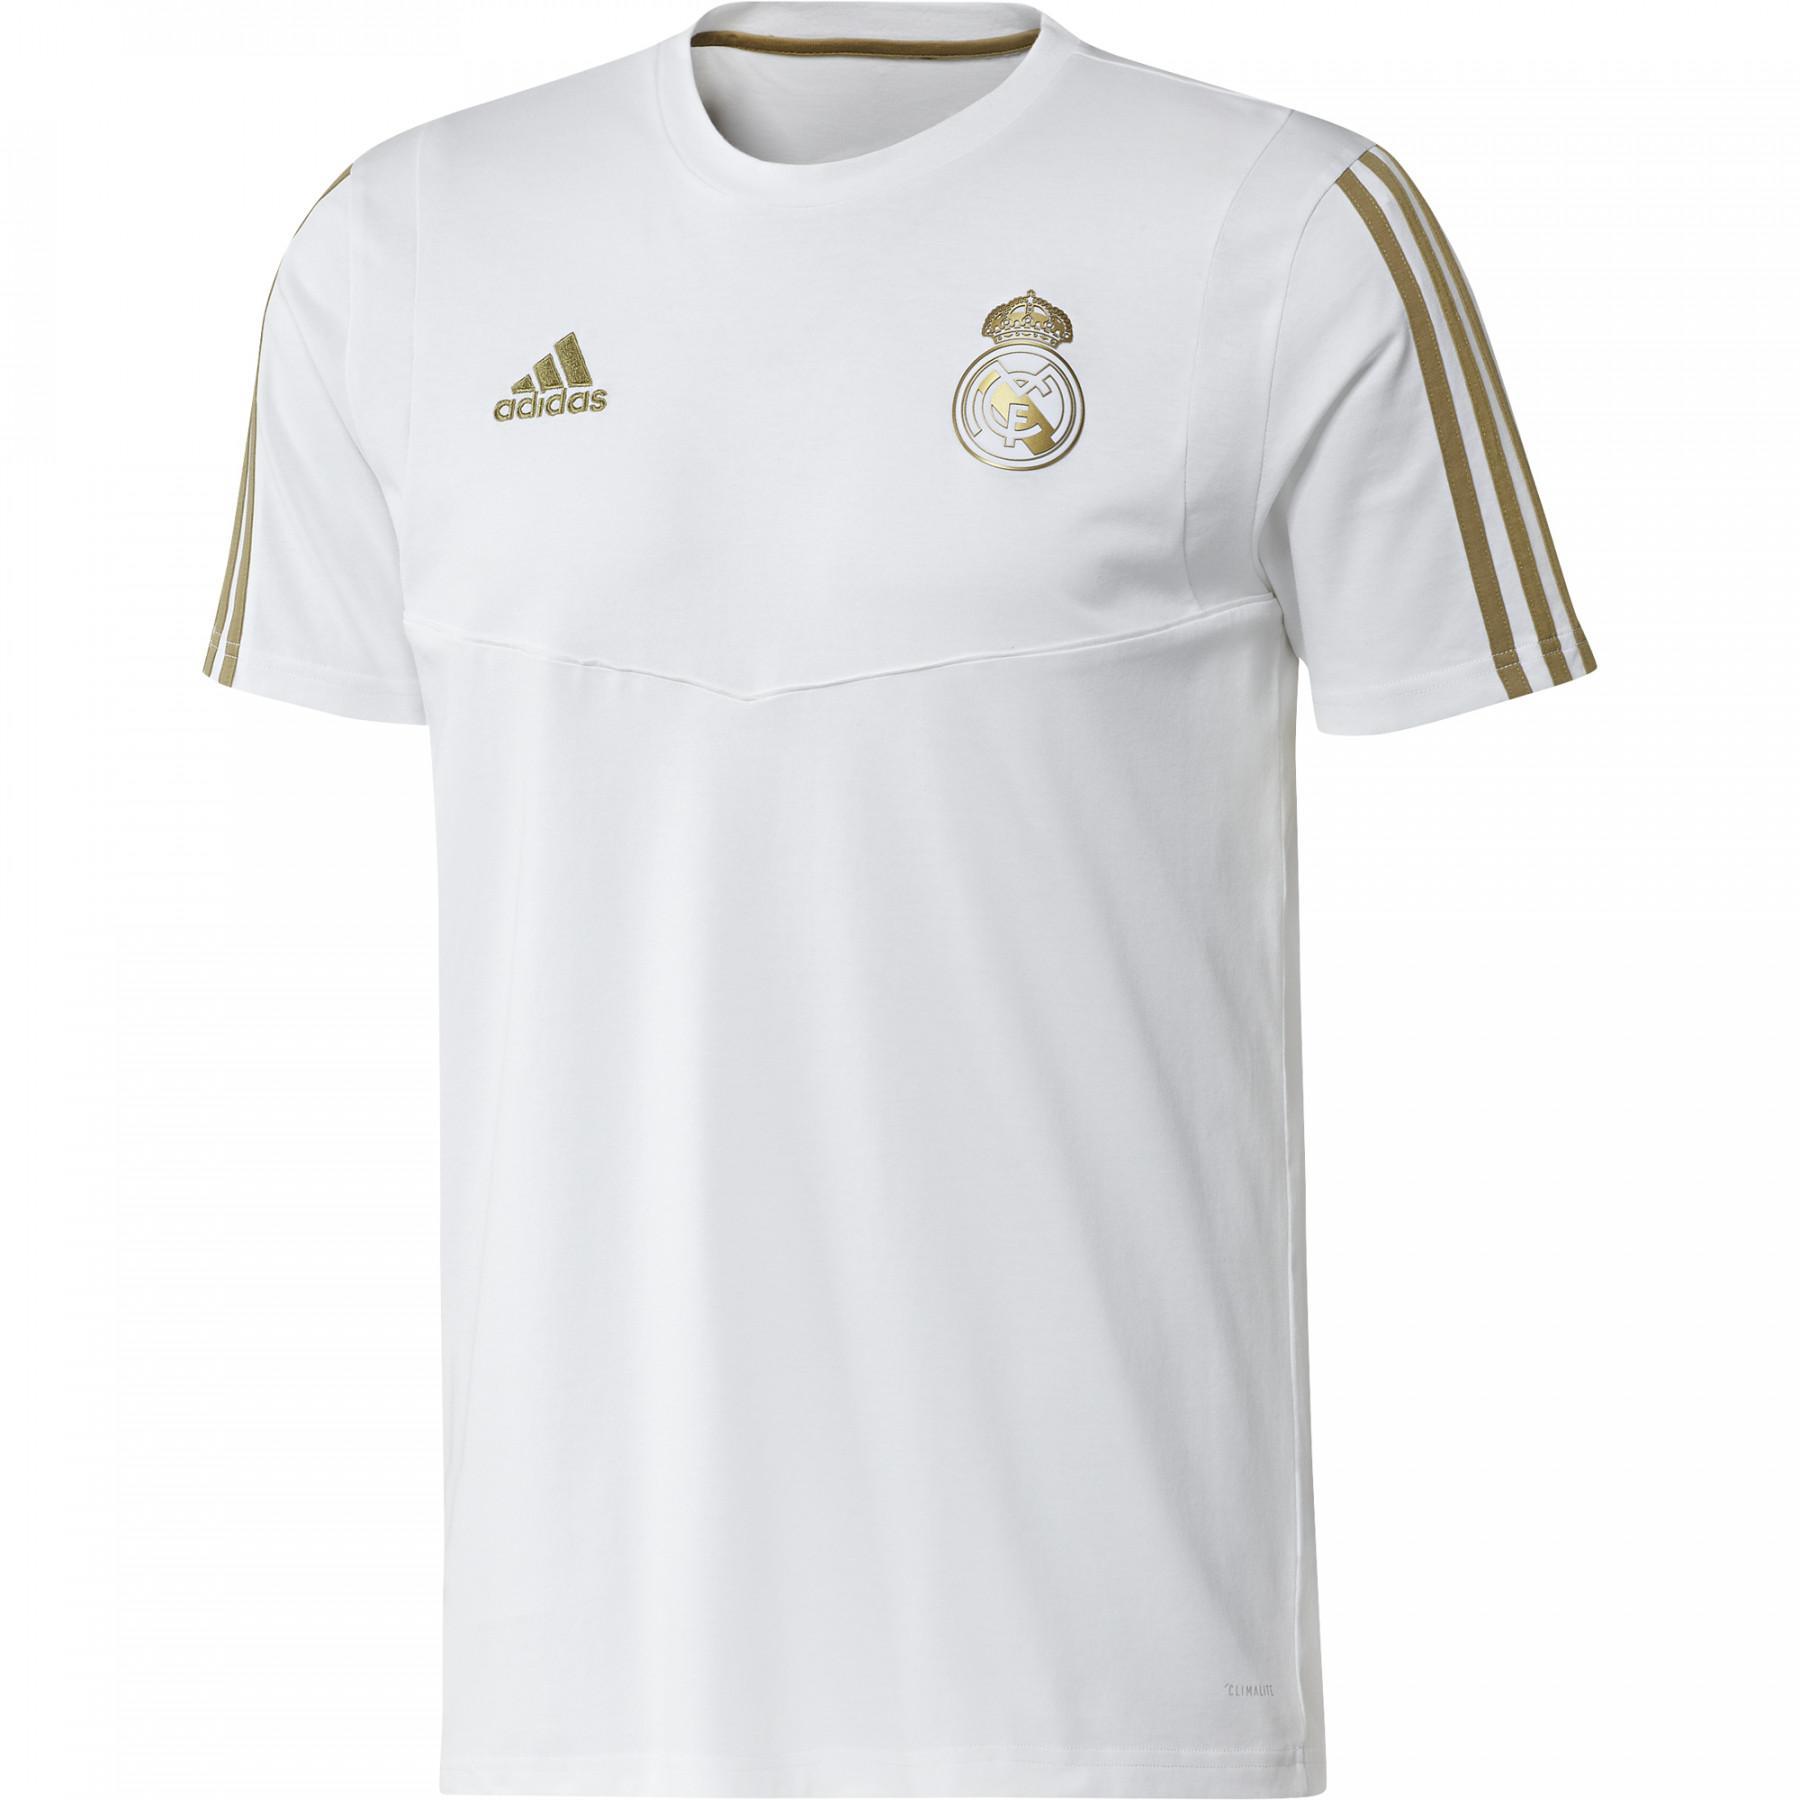 T-shirt Real Madrid